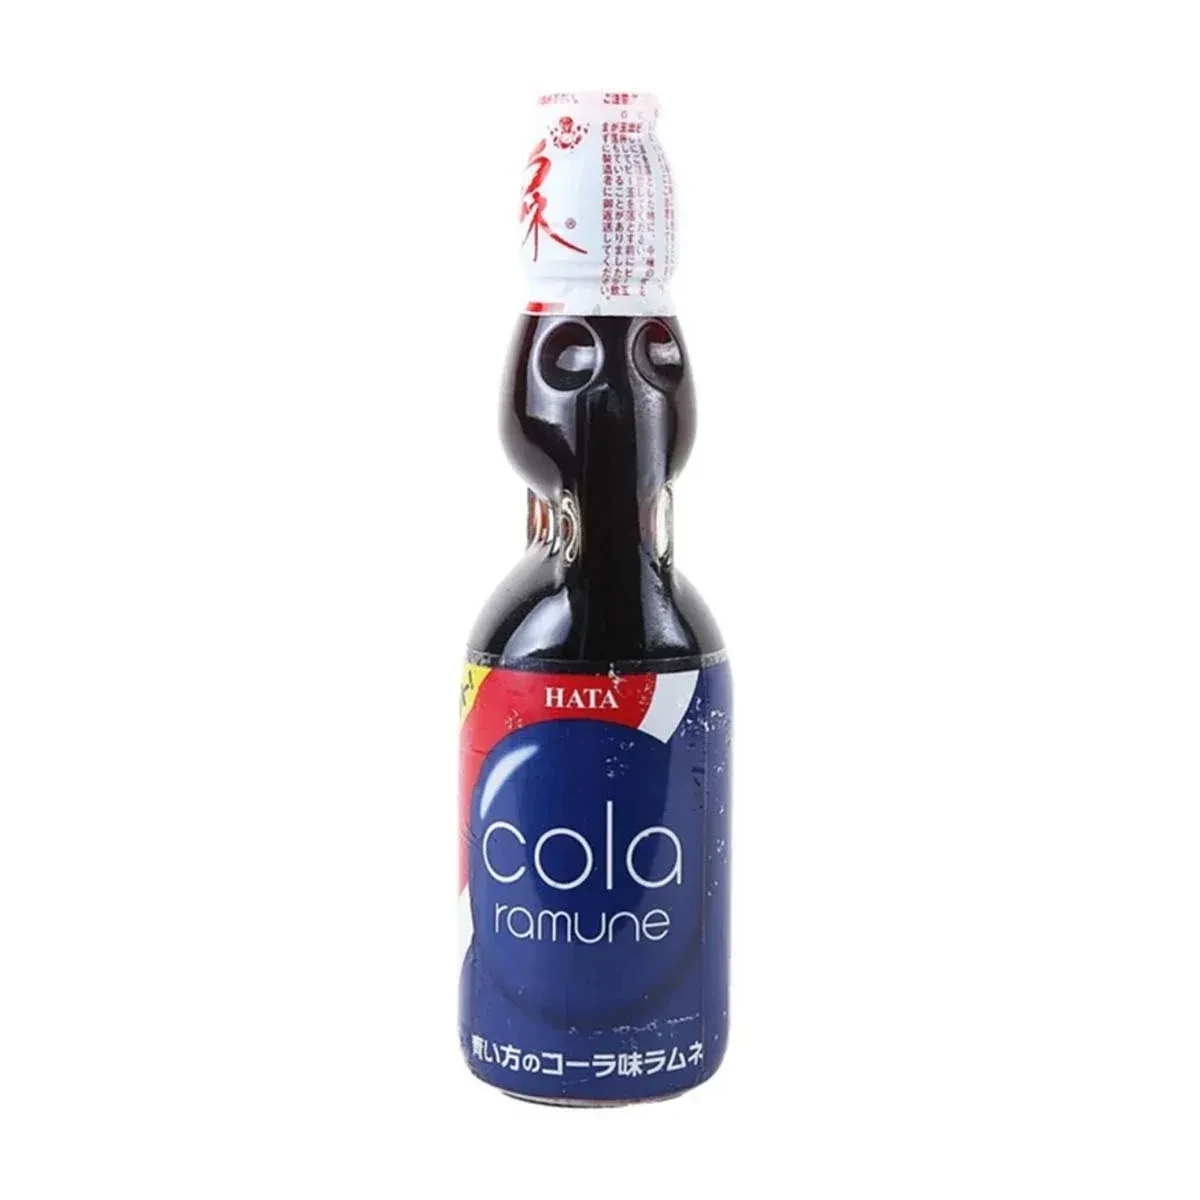 Hata Cola 200ml